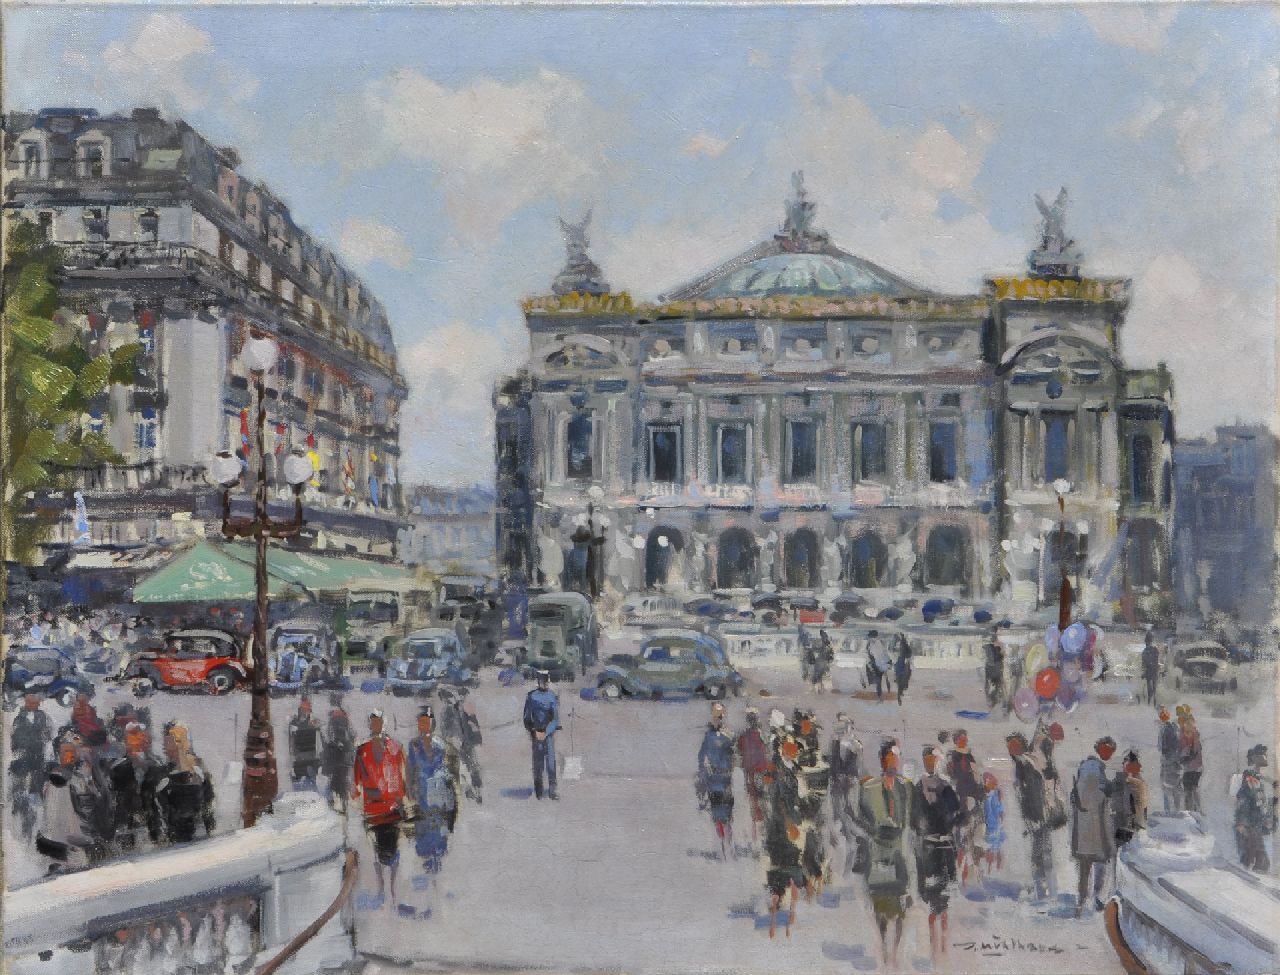 Mühlhaus D.  | Daniël 'Daan' Mühlhaus, De Place de l'Opéra, Parijs, olieverf op doek 59,9 x 79,9 cm, gesigneerd rechtsonder